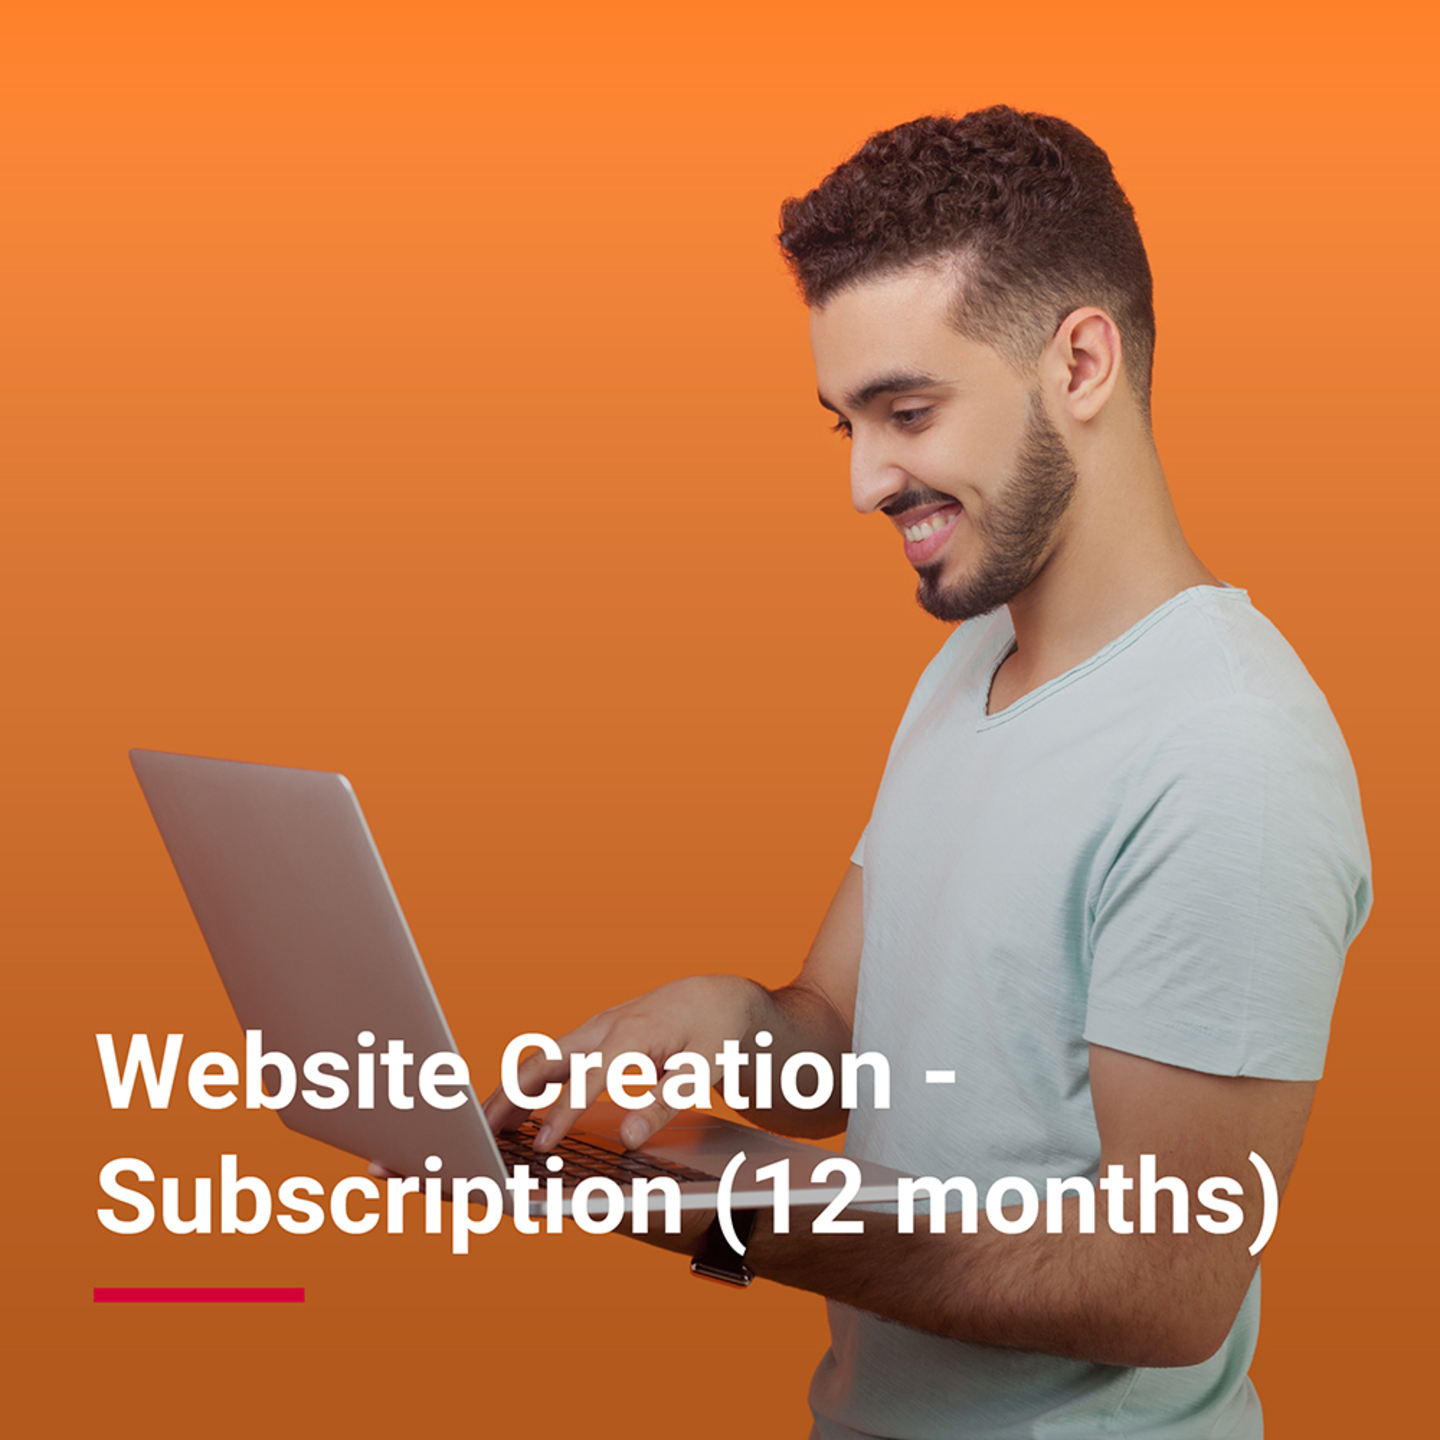 Website Creation - Subscription 12 months